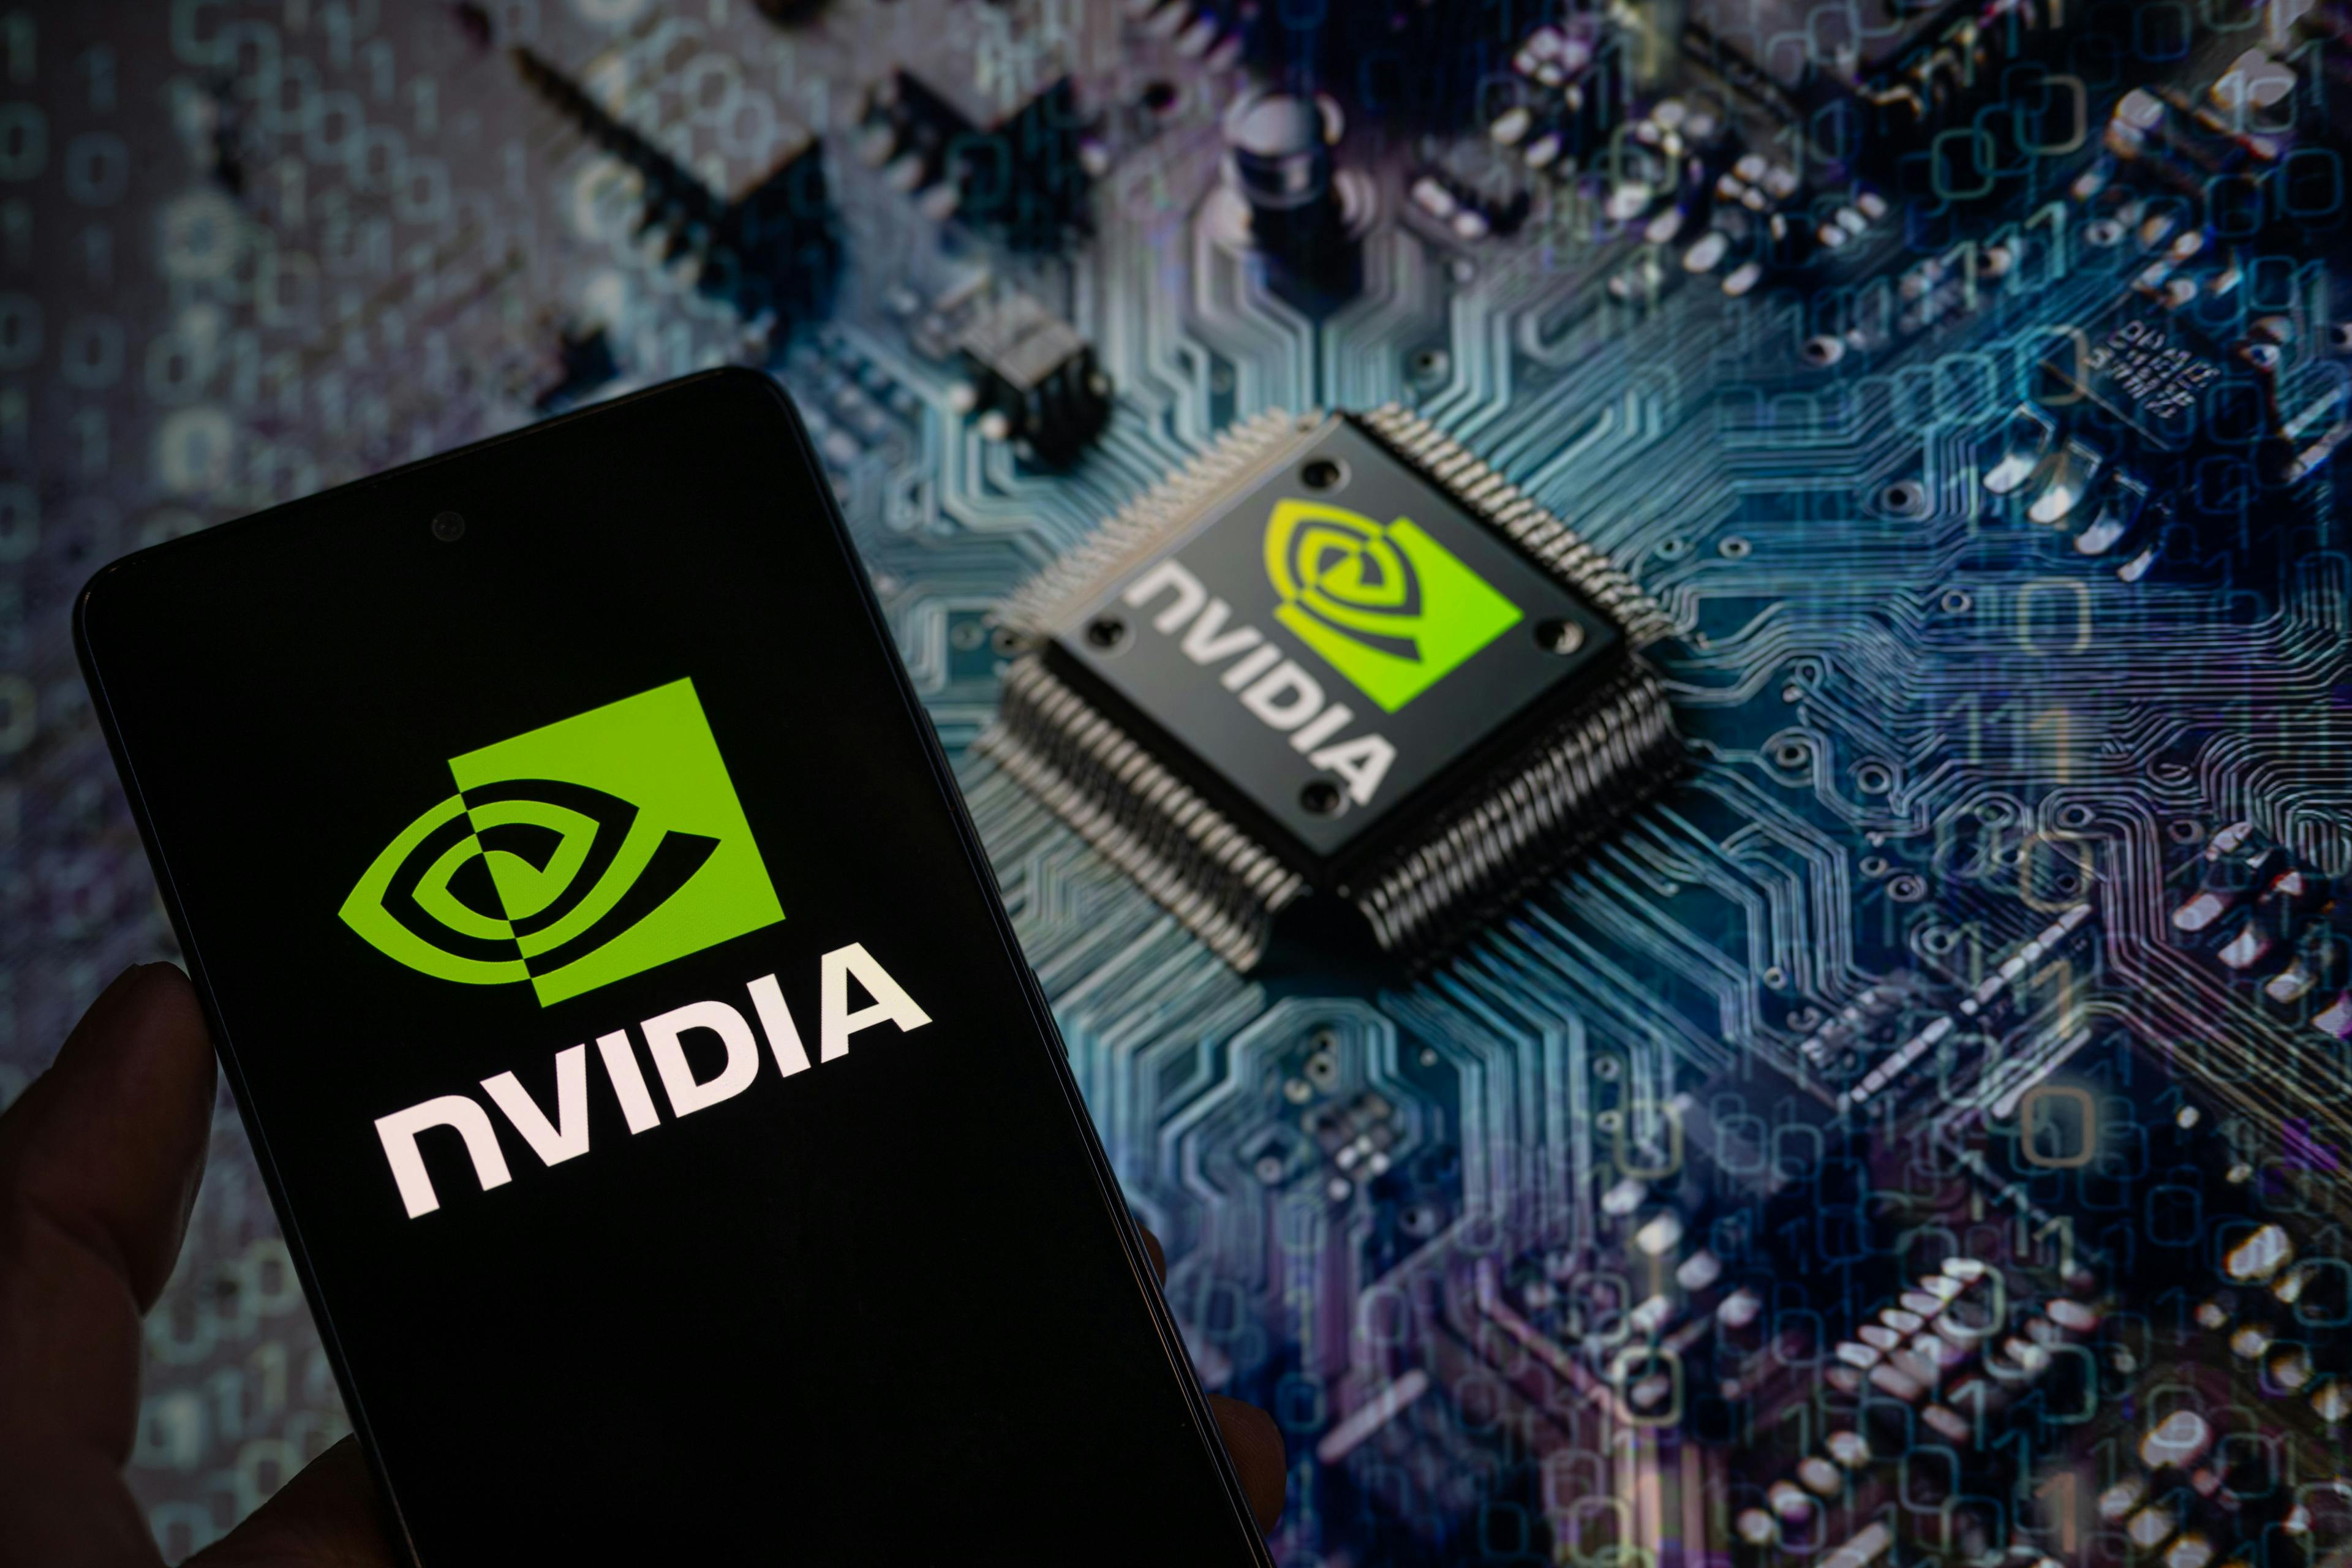 An Nvidia logo on a computer chip.